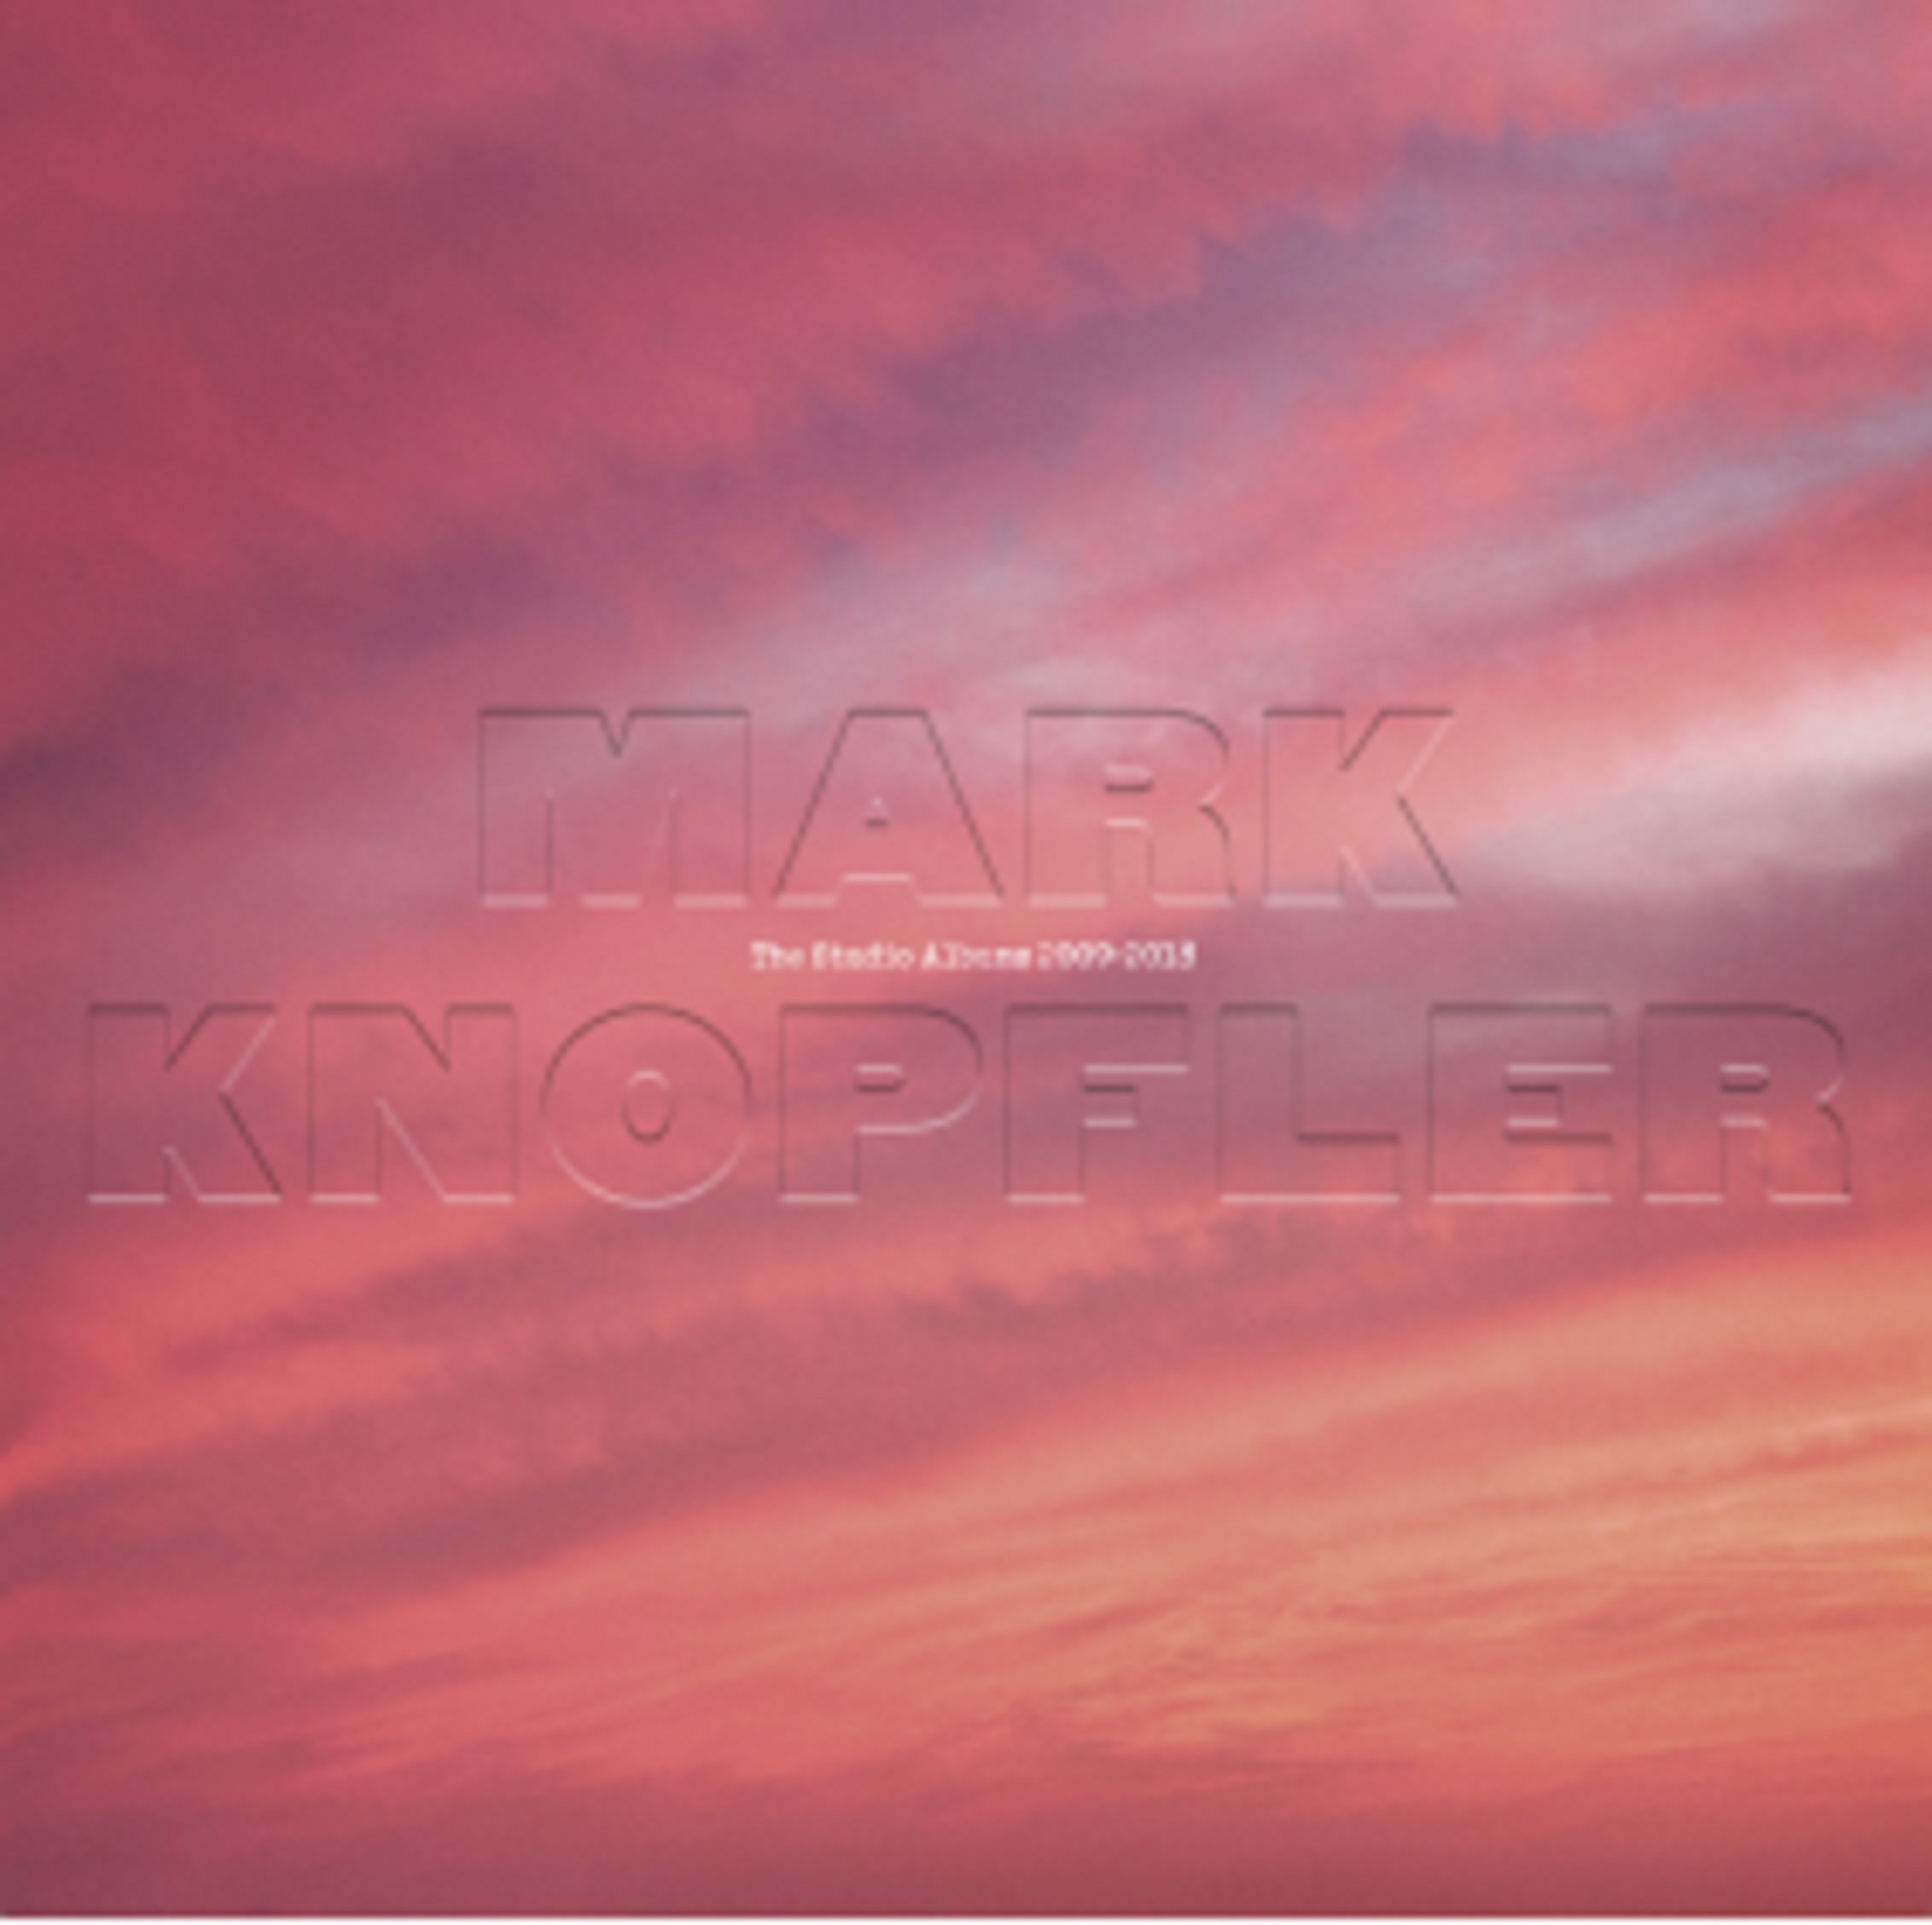 MARK KNOPFLER - THE STUDIO ALBUMS 2009-2018 - 9 LP VINYL/6 CD BOX SET & DIGITAL HD/SD TO BE RELEASED ON OCTOBER 7, 2022